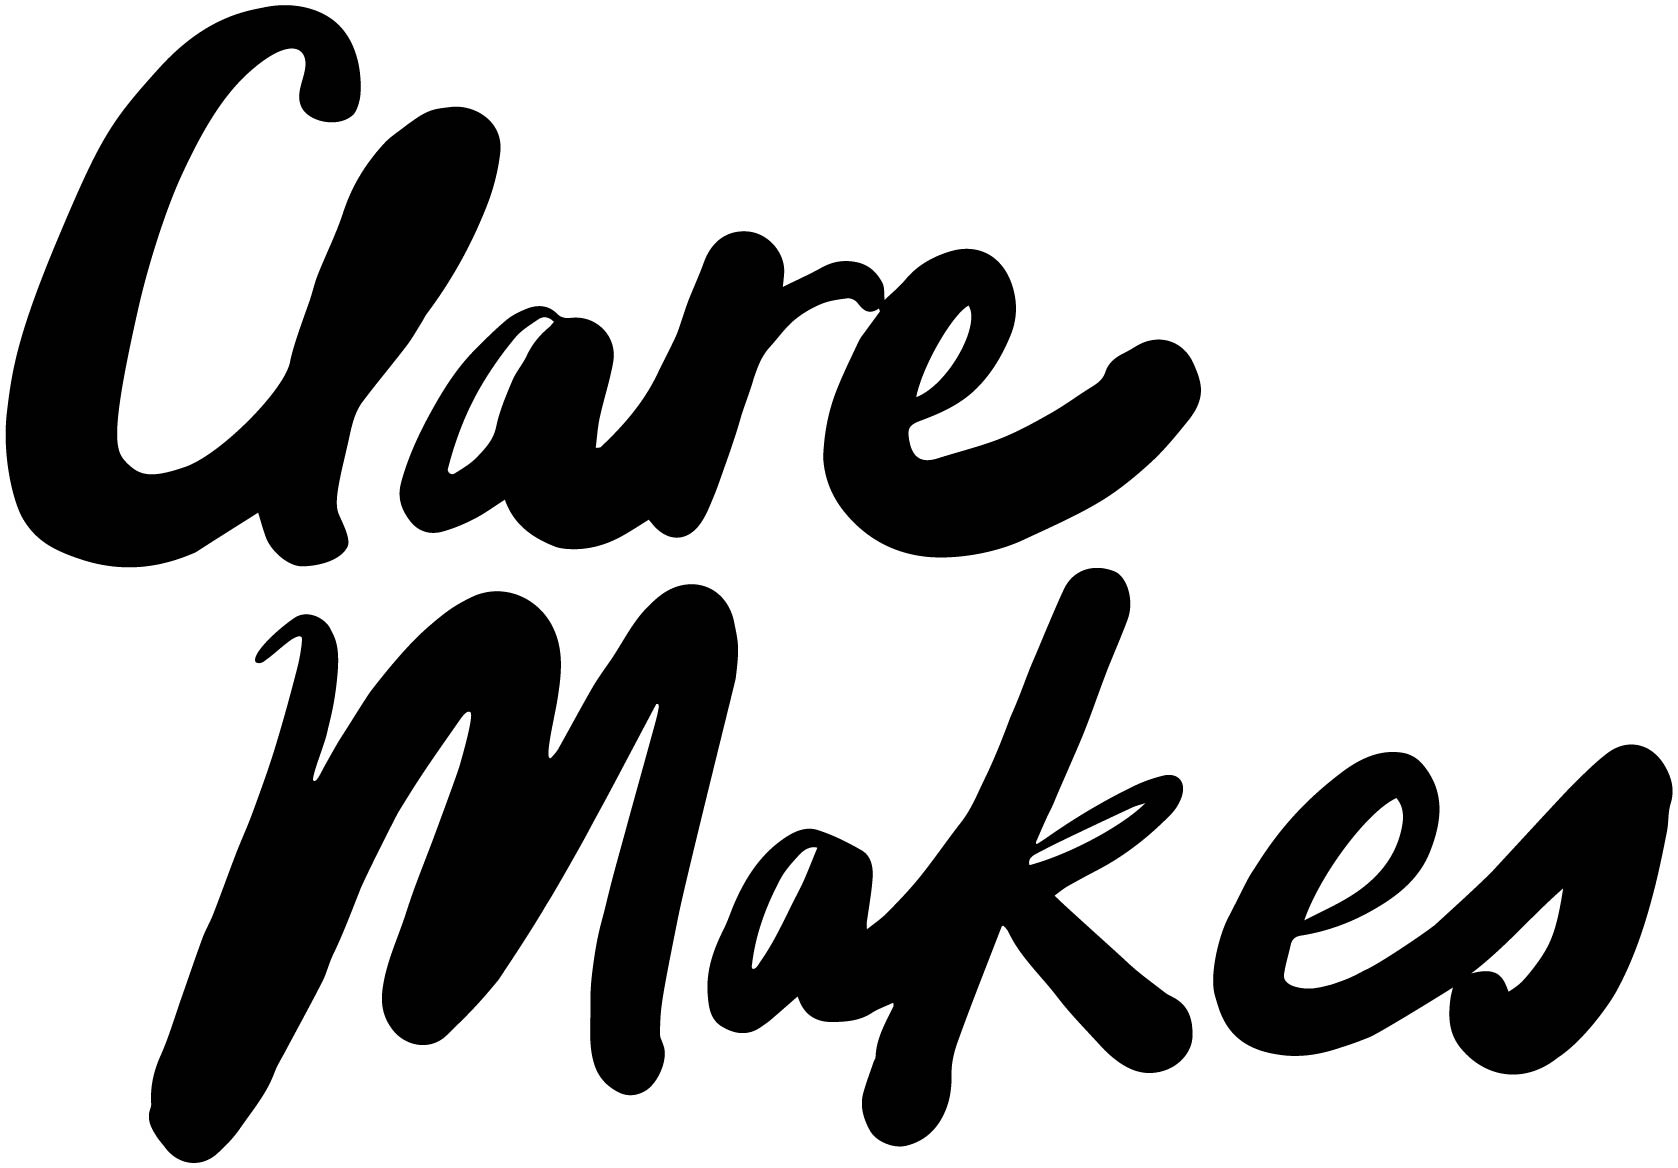 Clare Makes